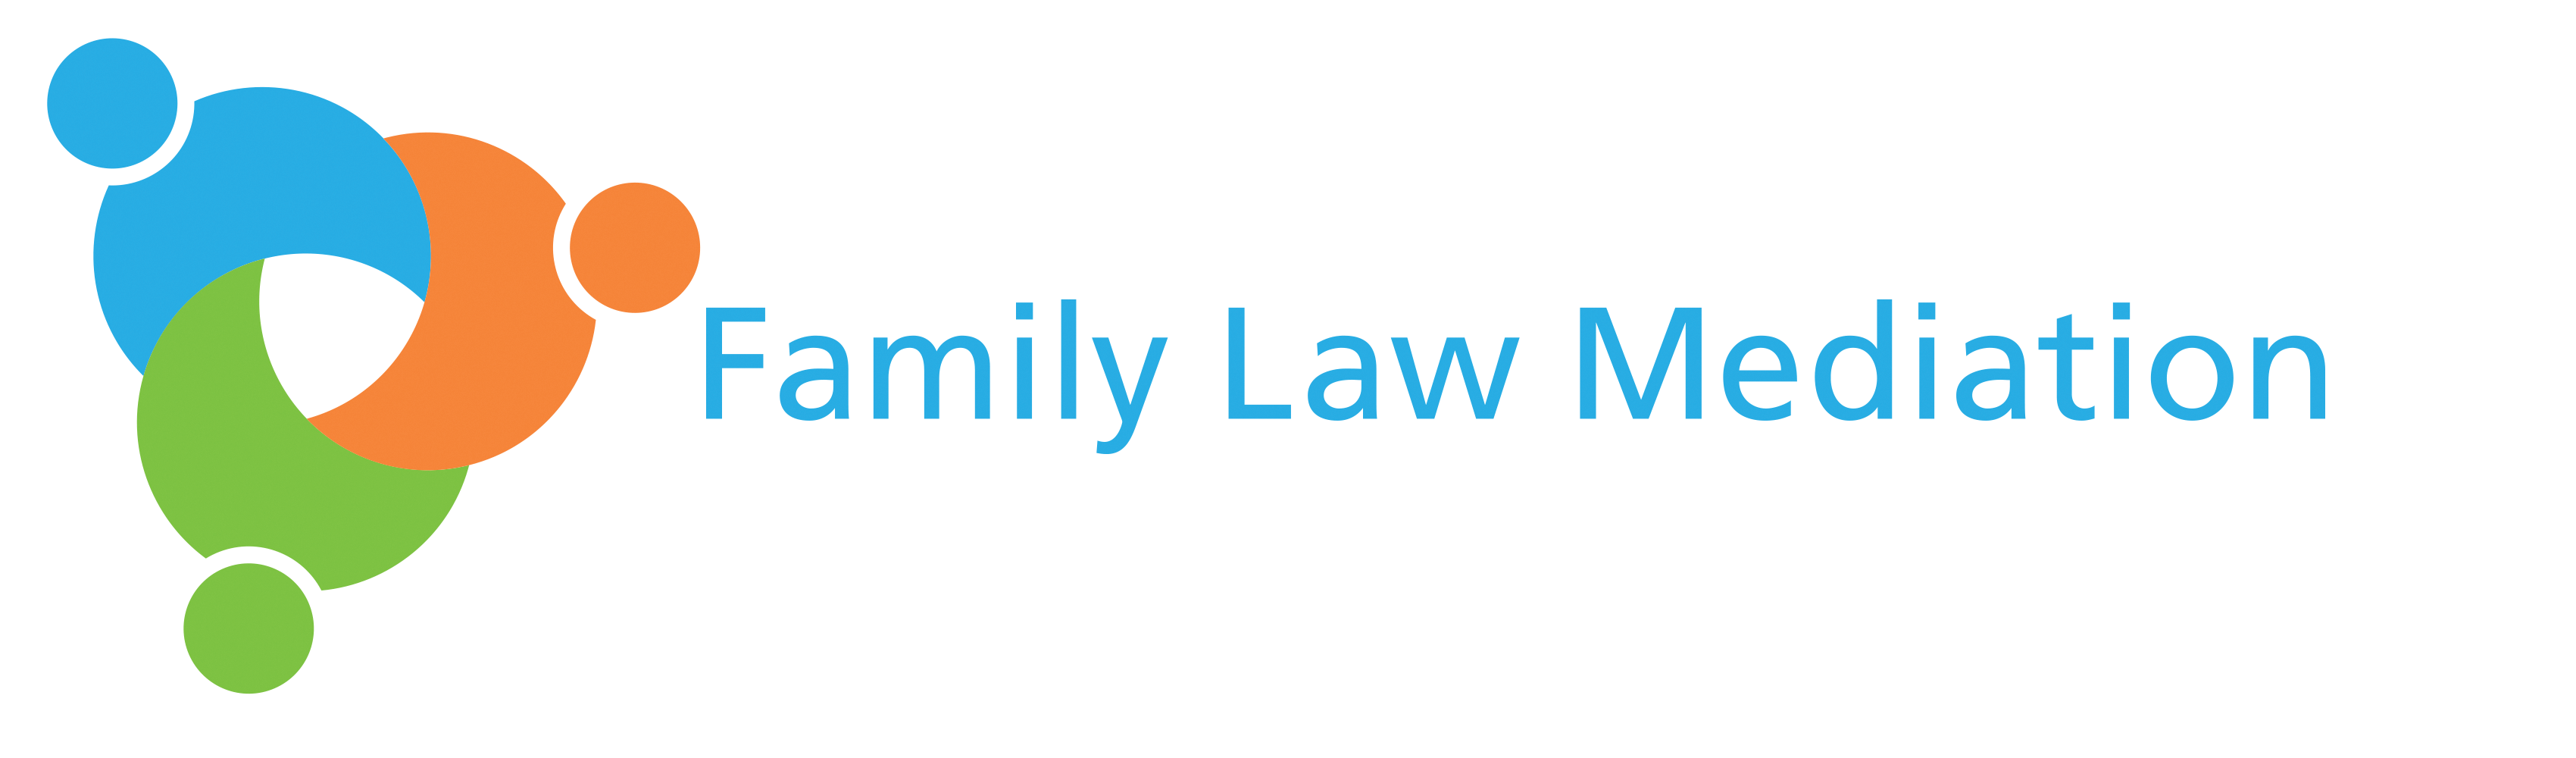 Family Law Mediation